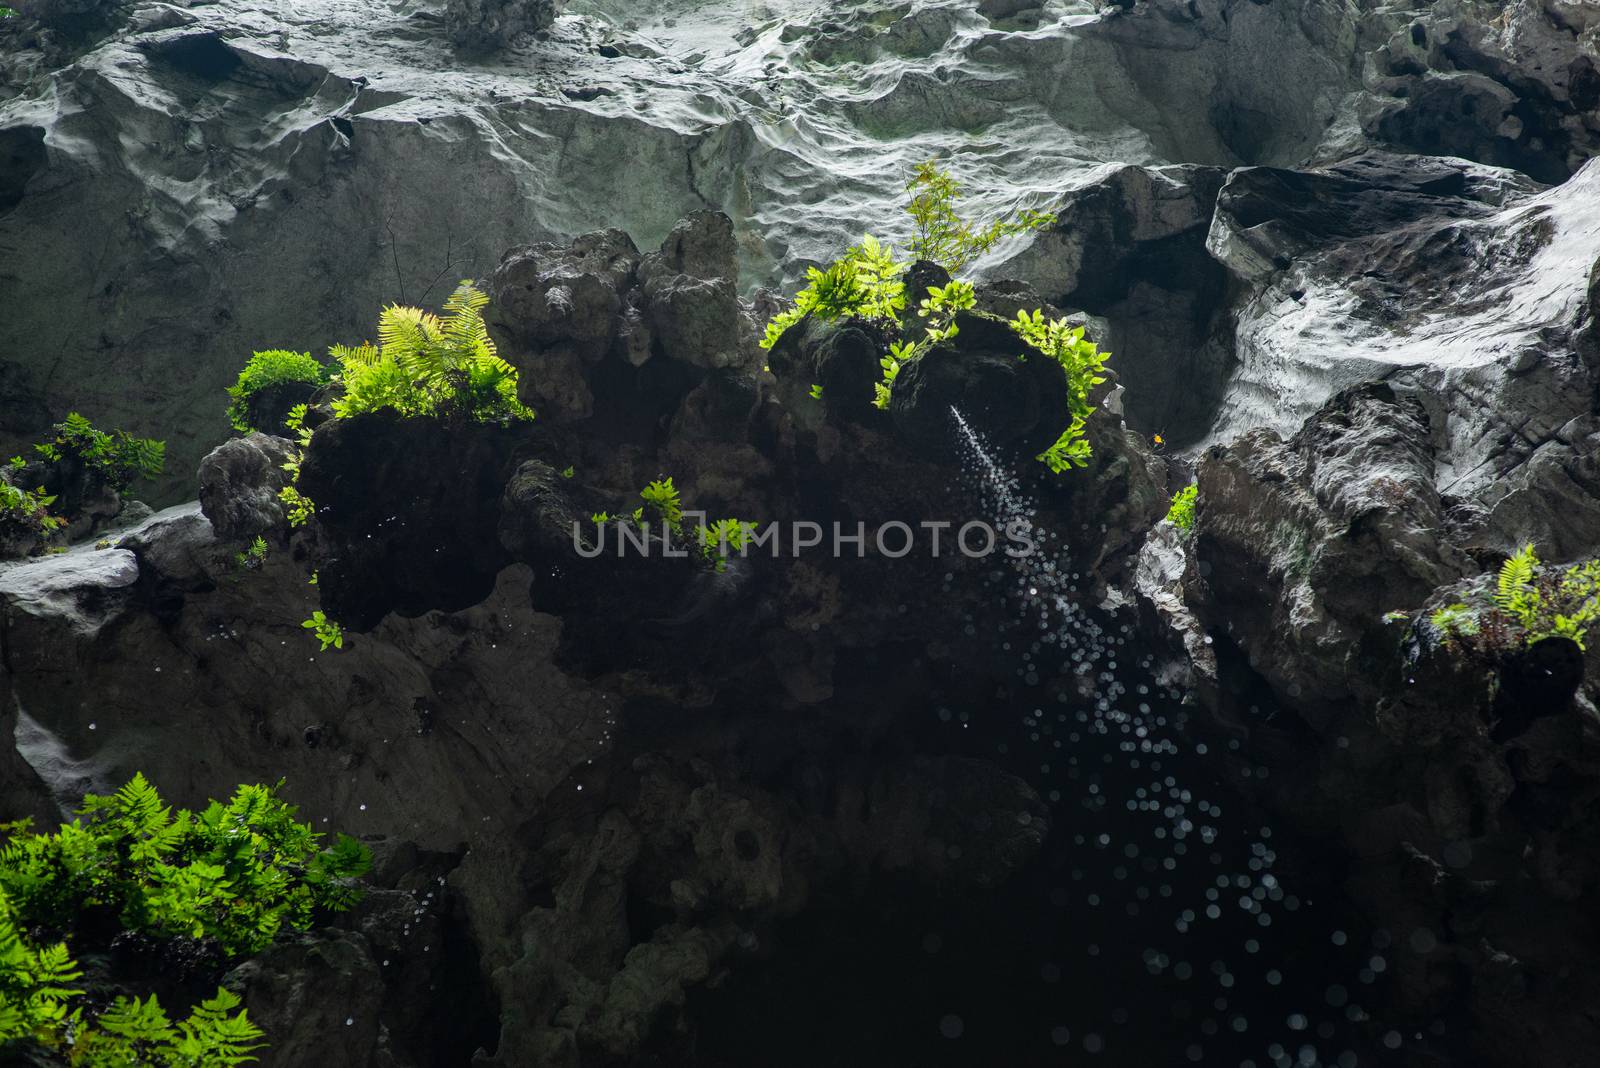 View in the Batu Caves by szefei